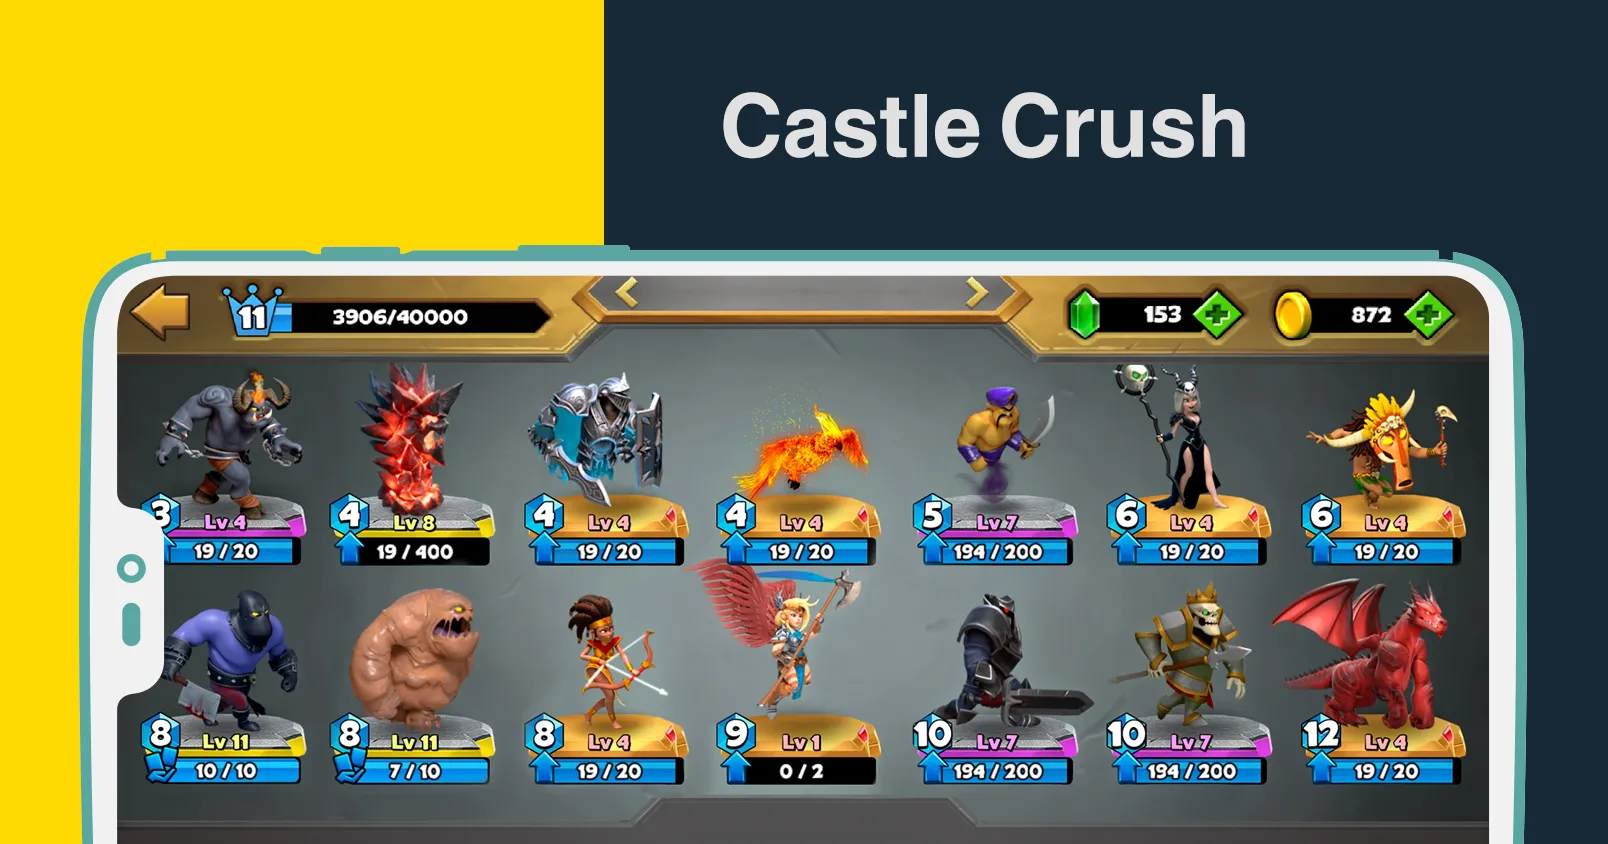 castle clash مهكرة كل الشخصيات مفتوحة
تحميل castle crush مهكرة